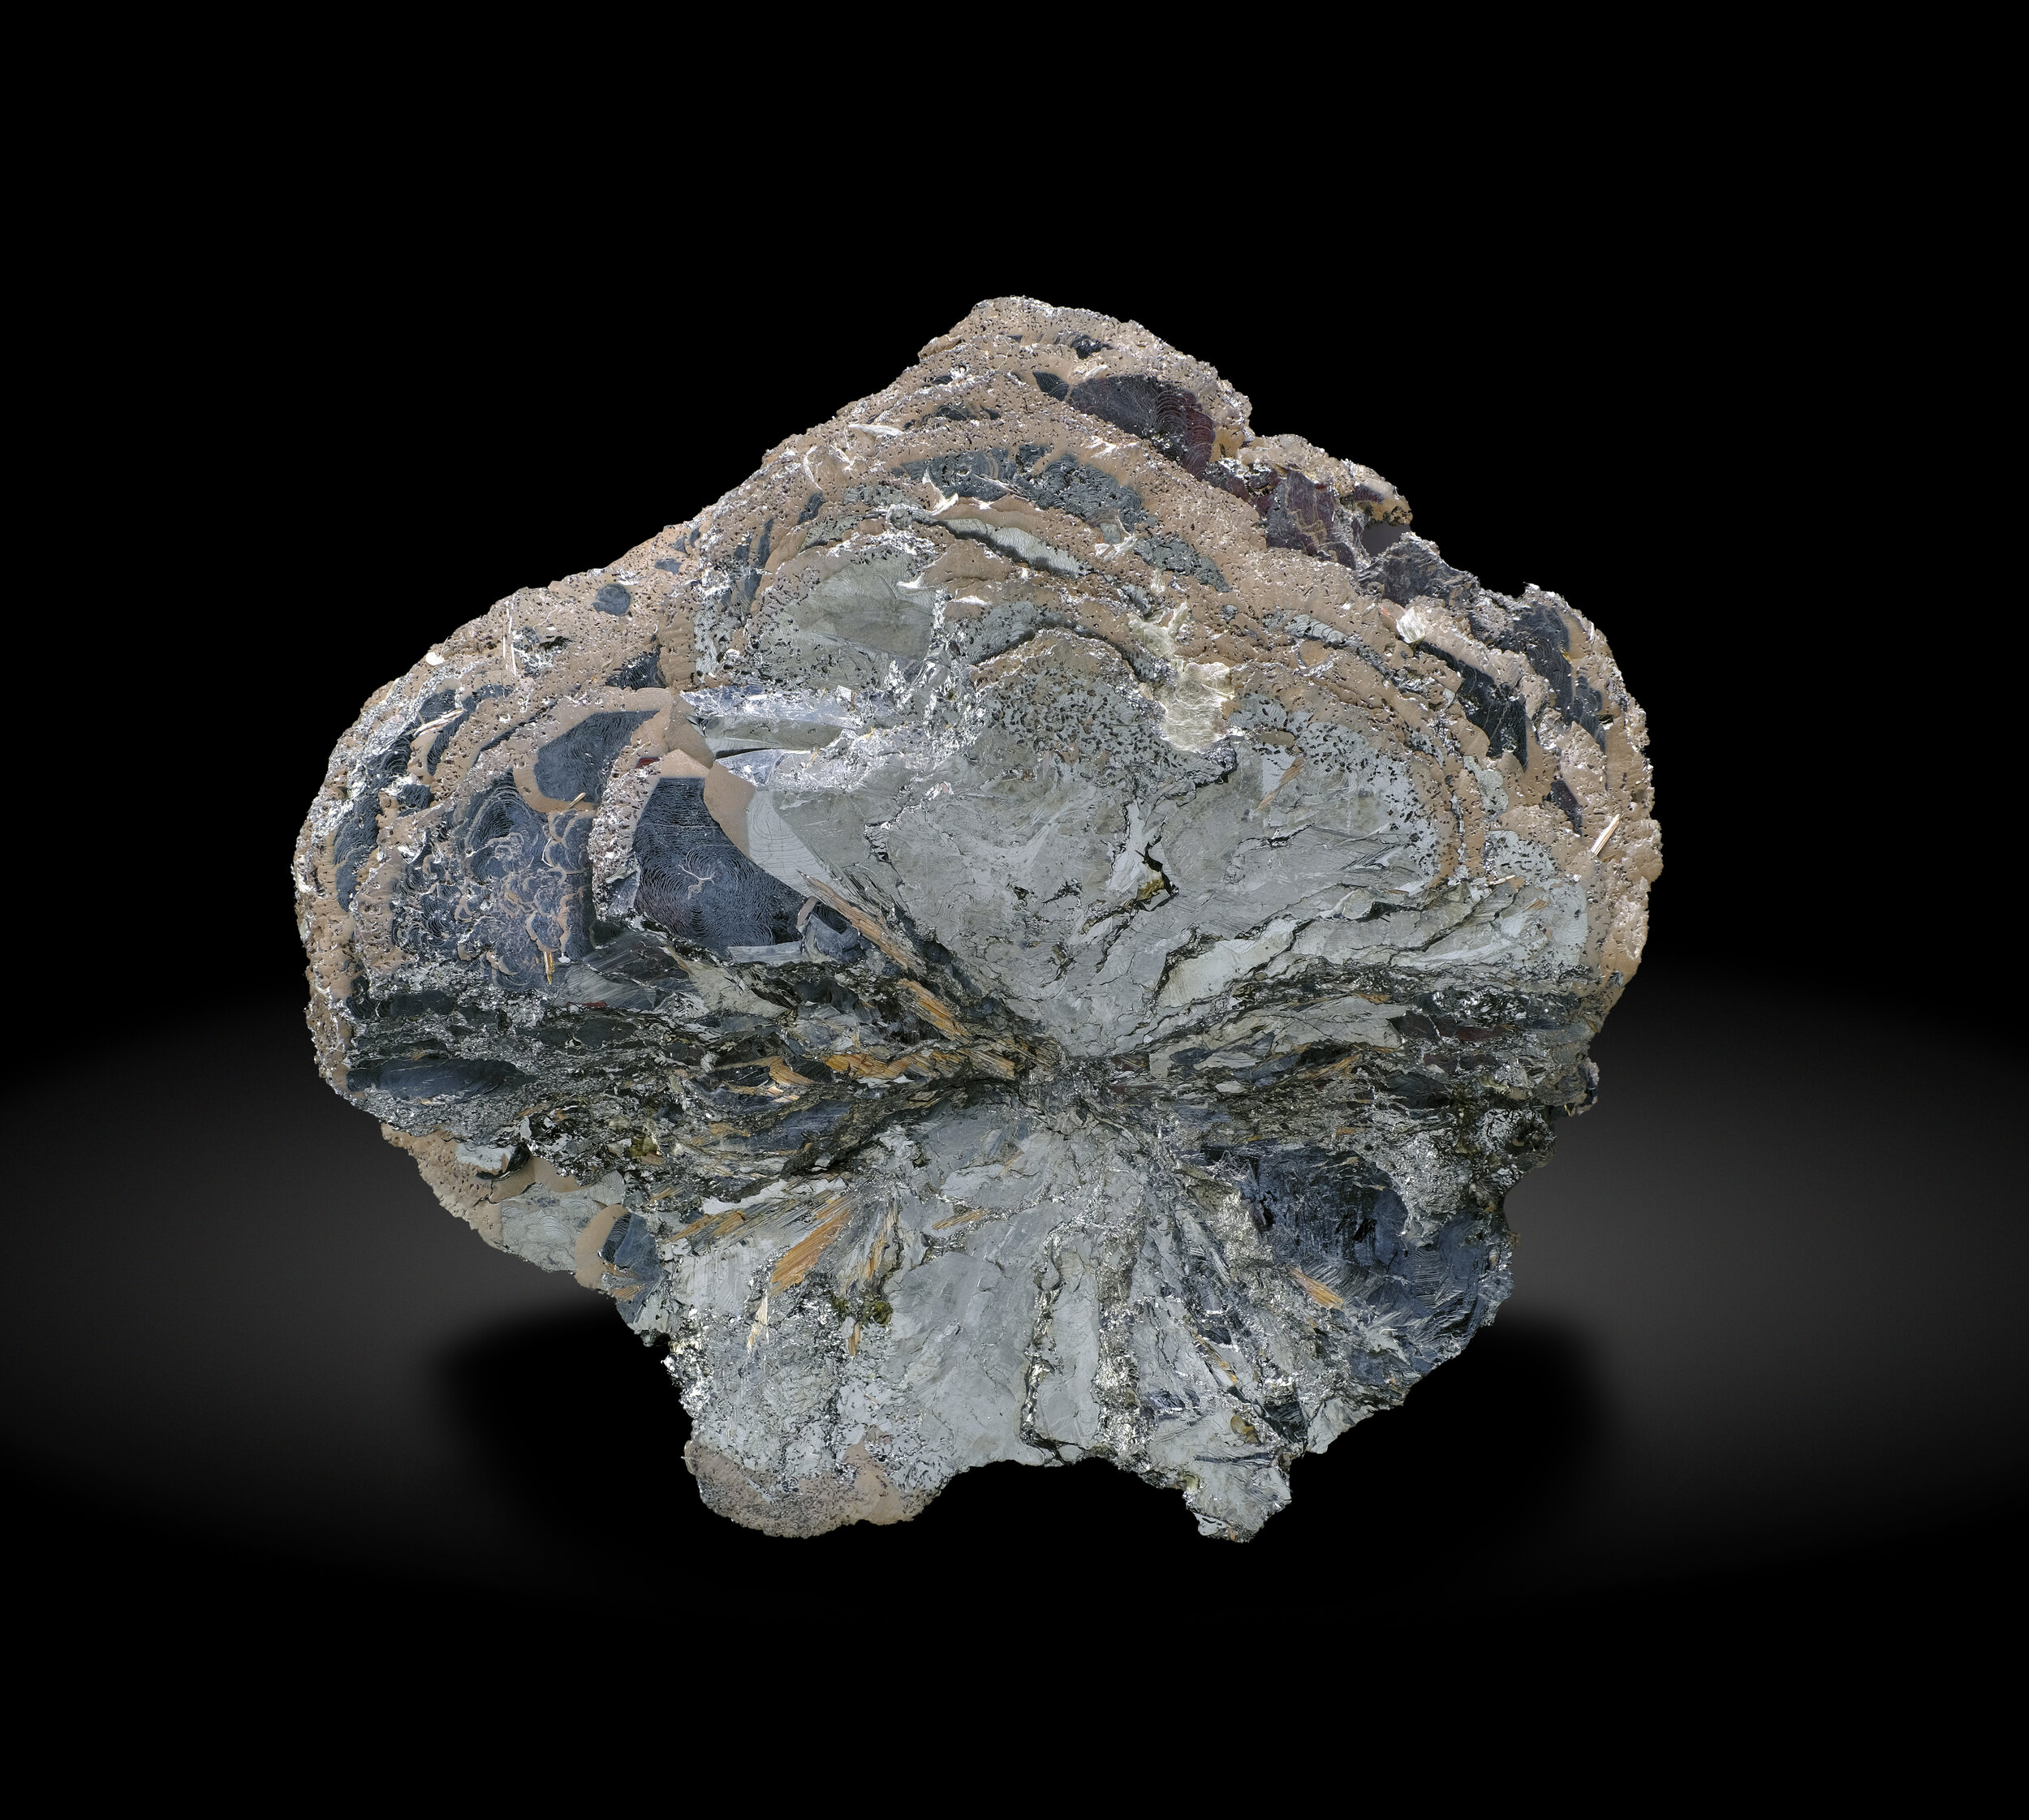 specimens/s_imagesAO2/Hematite-MFM56AO2_6742_r.jpg